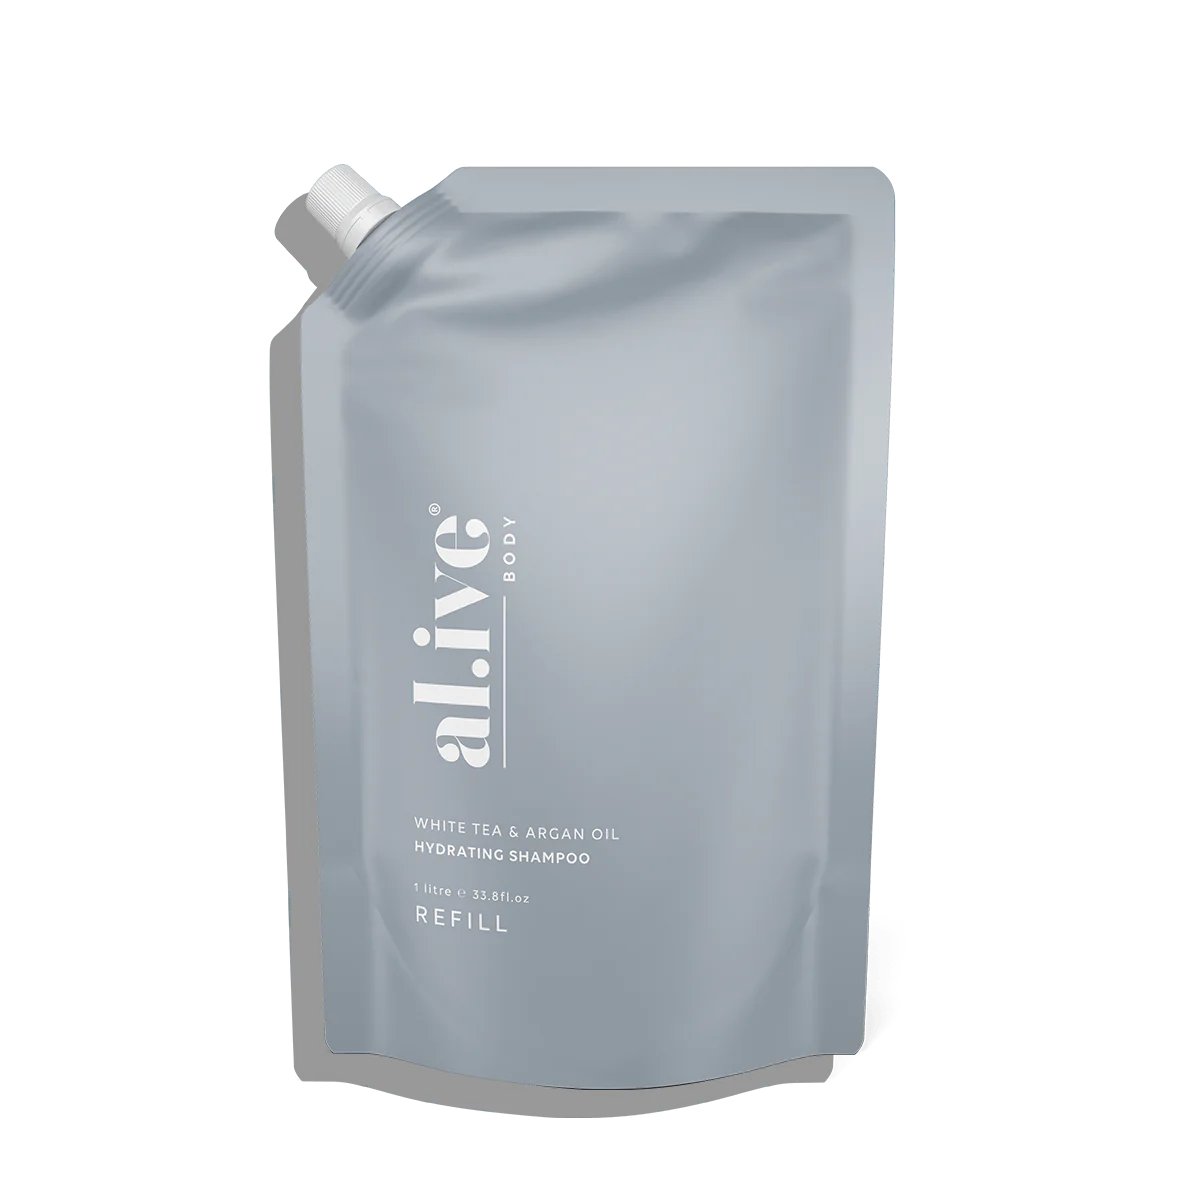 Al.ive Body 1 Ltr Hydrating Shampoo Refill - White Tea & Argan Oil